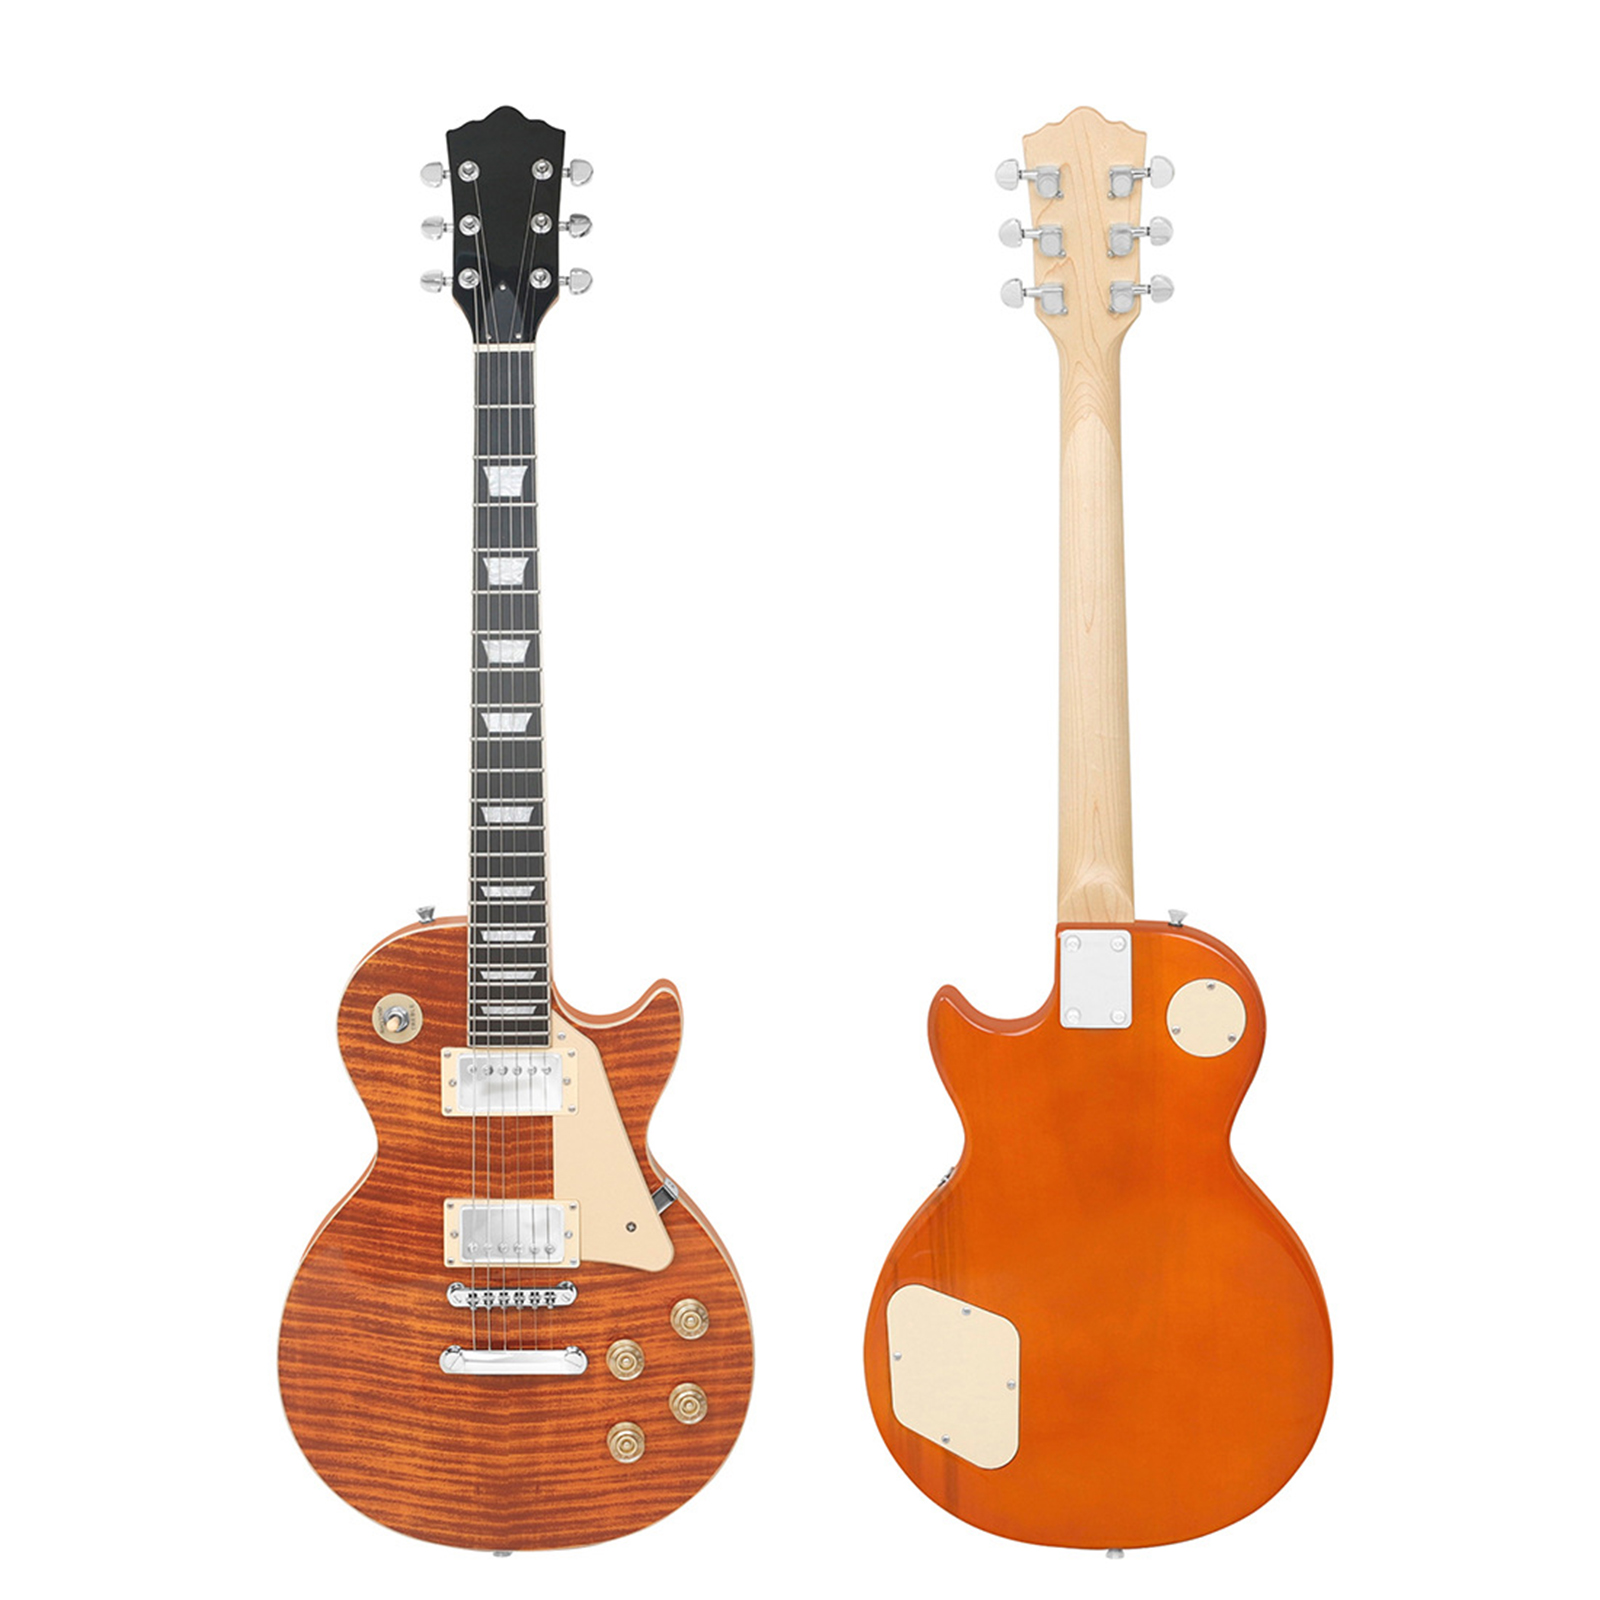 LP Beginner Electric Guitar 100cm Length Maple Neck Electric Guitar Musical Instruments Educational Tool